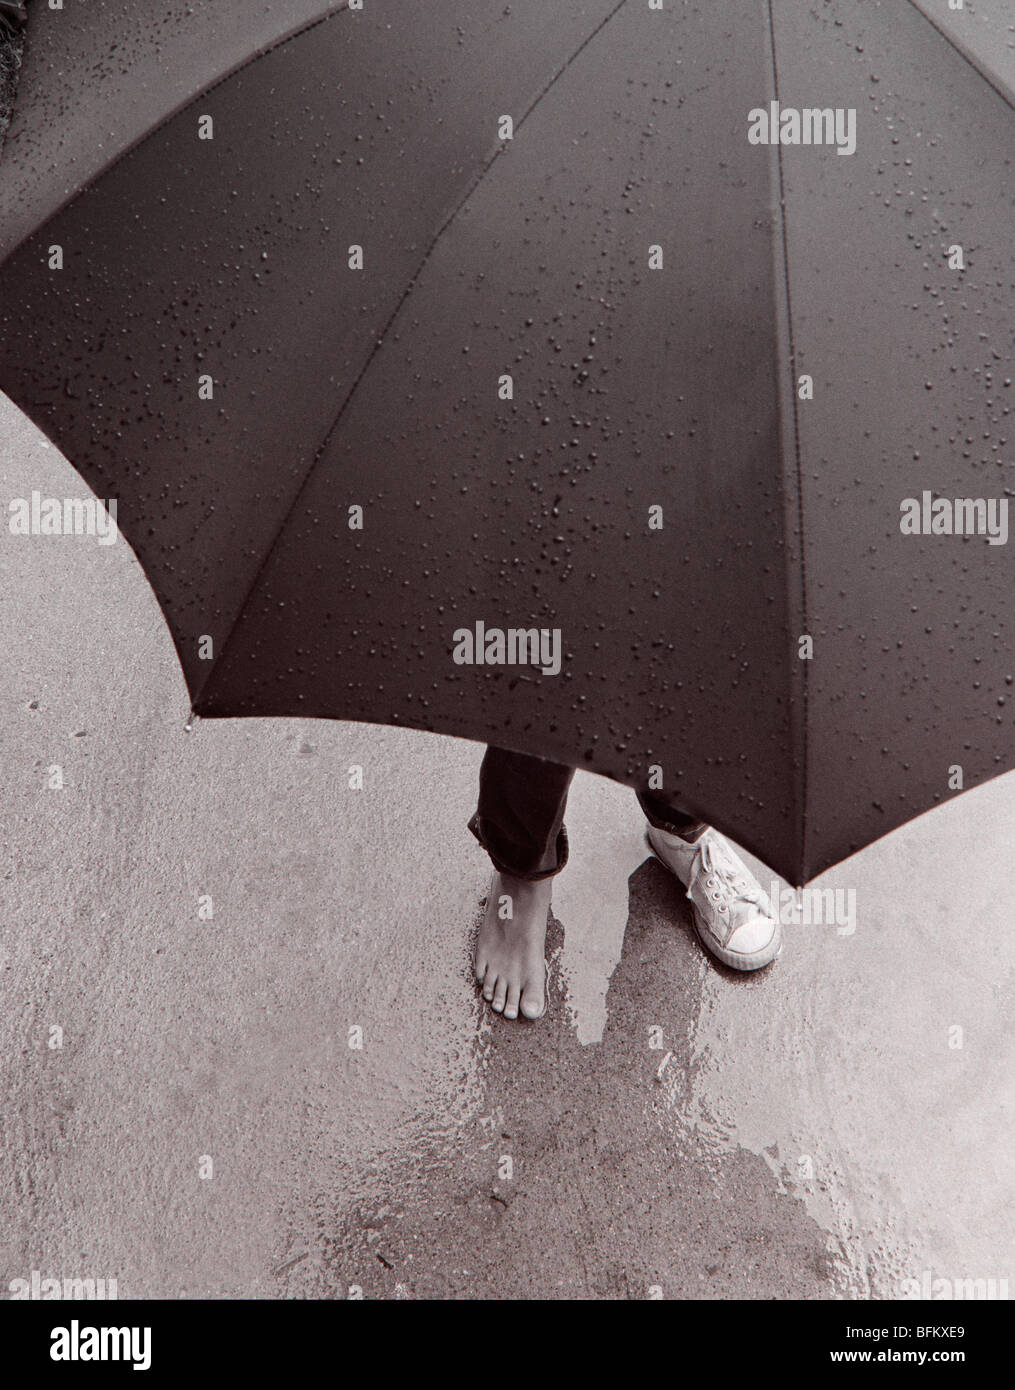 Person standing in rain with umbrella Stock Photo